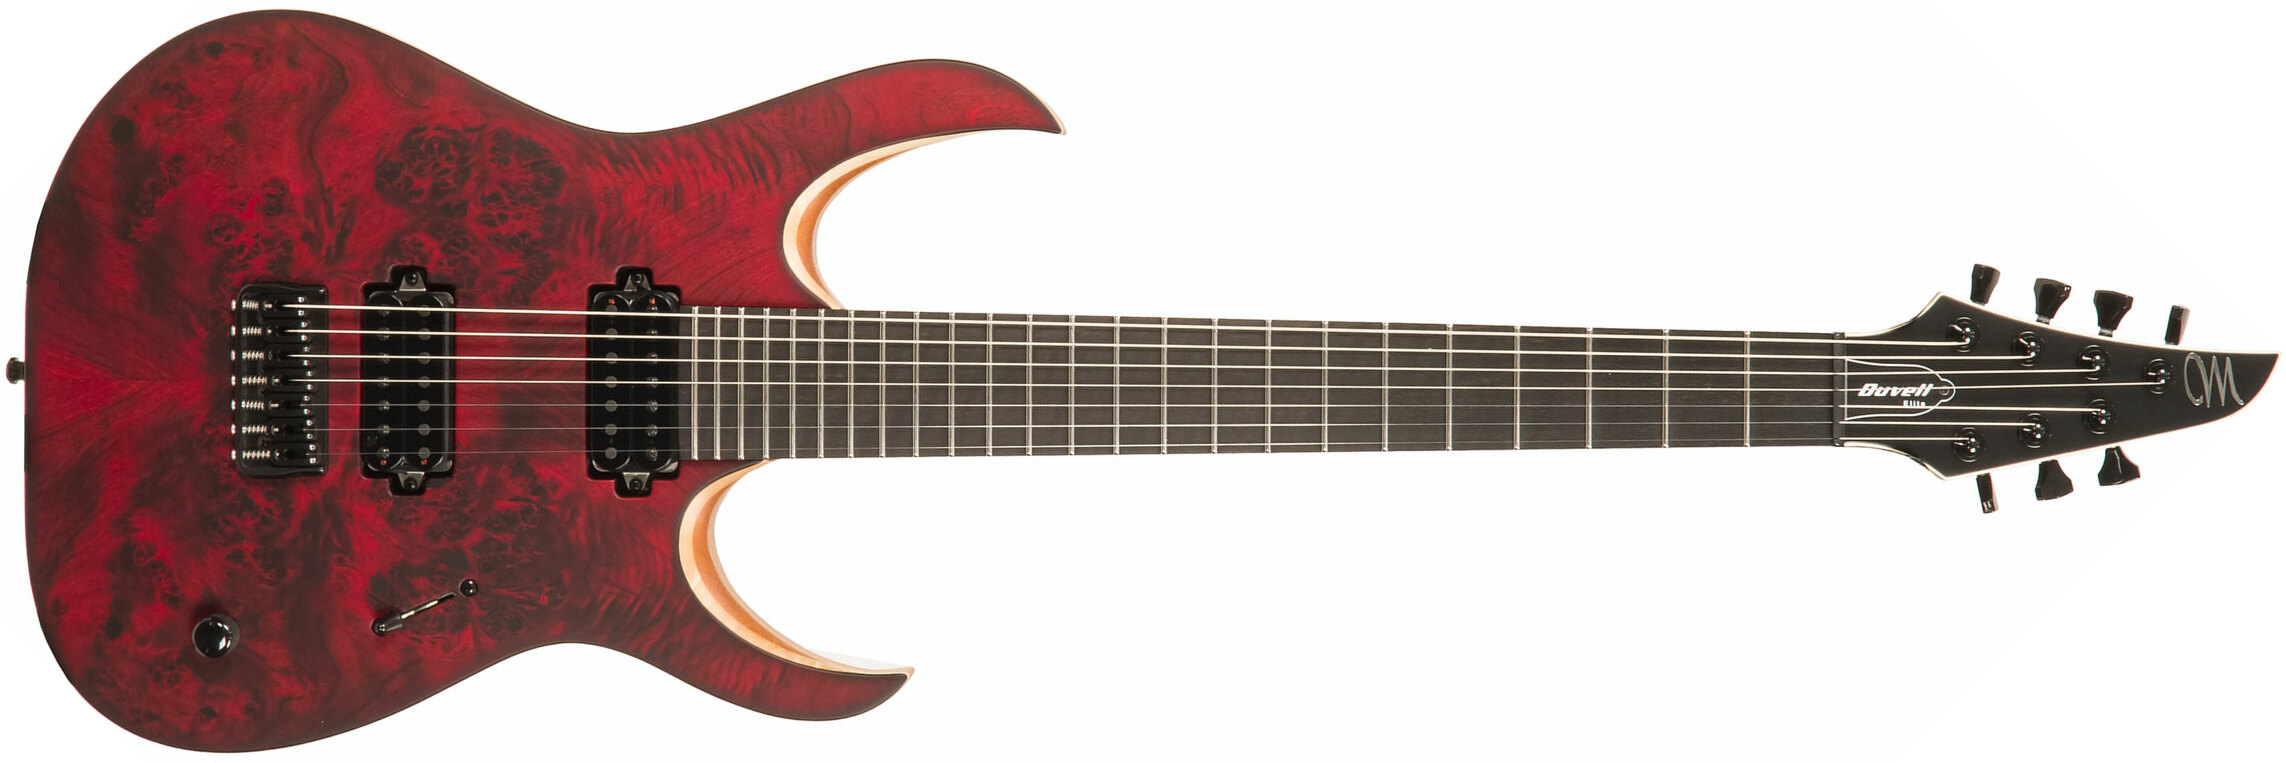 Mayones Guitars Duvell Elite 7 Hh Tko Ht Eb - Dirty Red Satin - Guitare Électrique 7 Cordes - Main picture